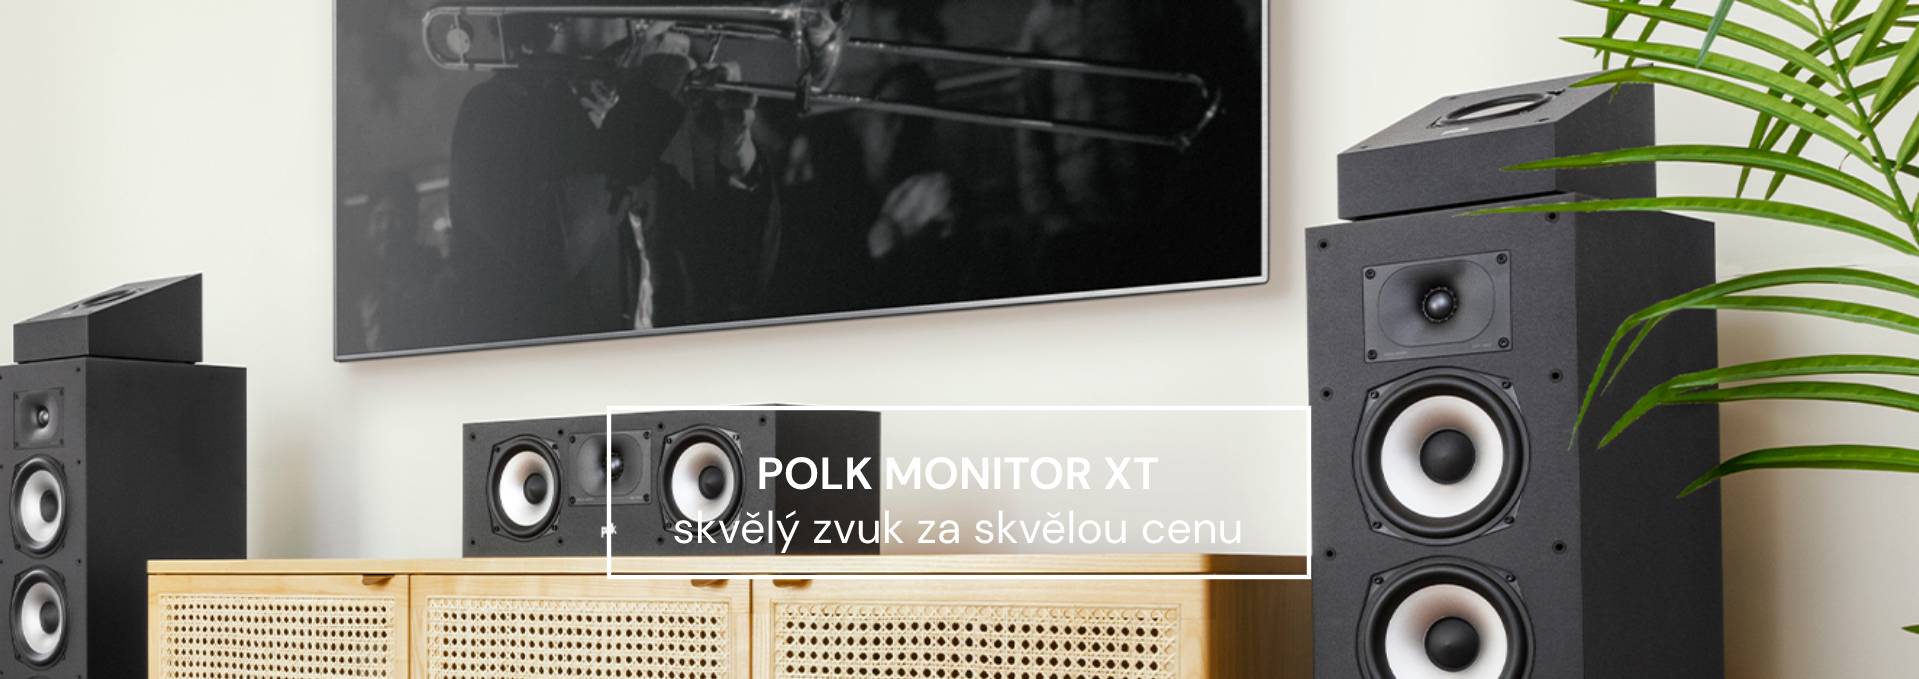 Polk Monitor XT